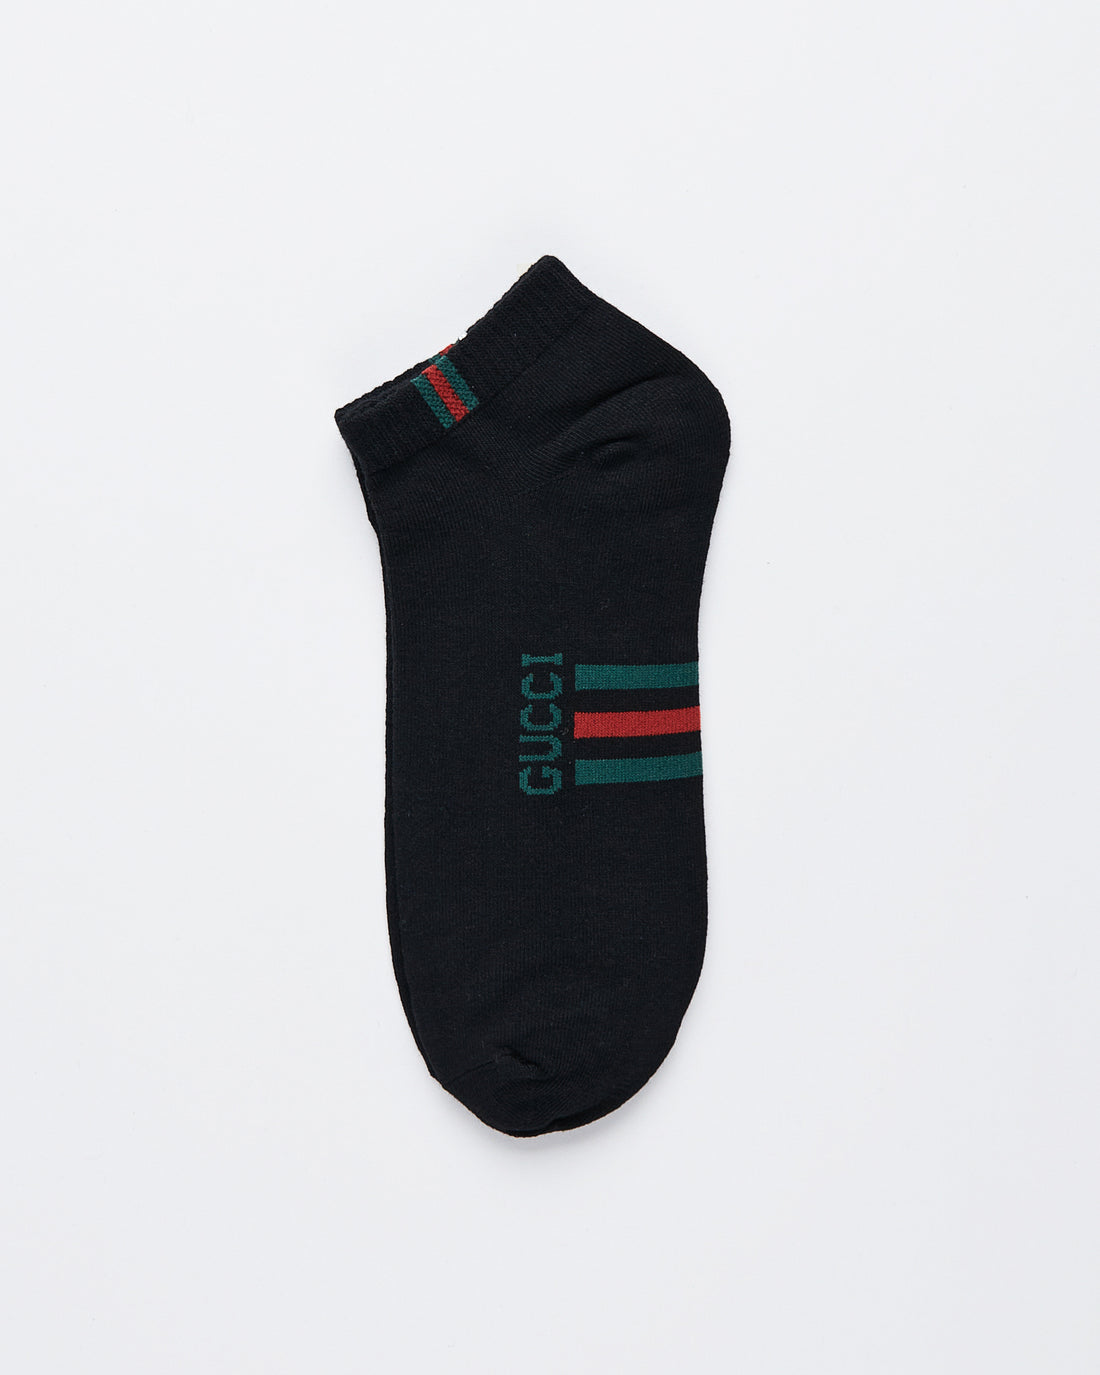 GUC Black Low Cut 1 Pairs Socks 1.90